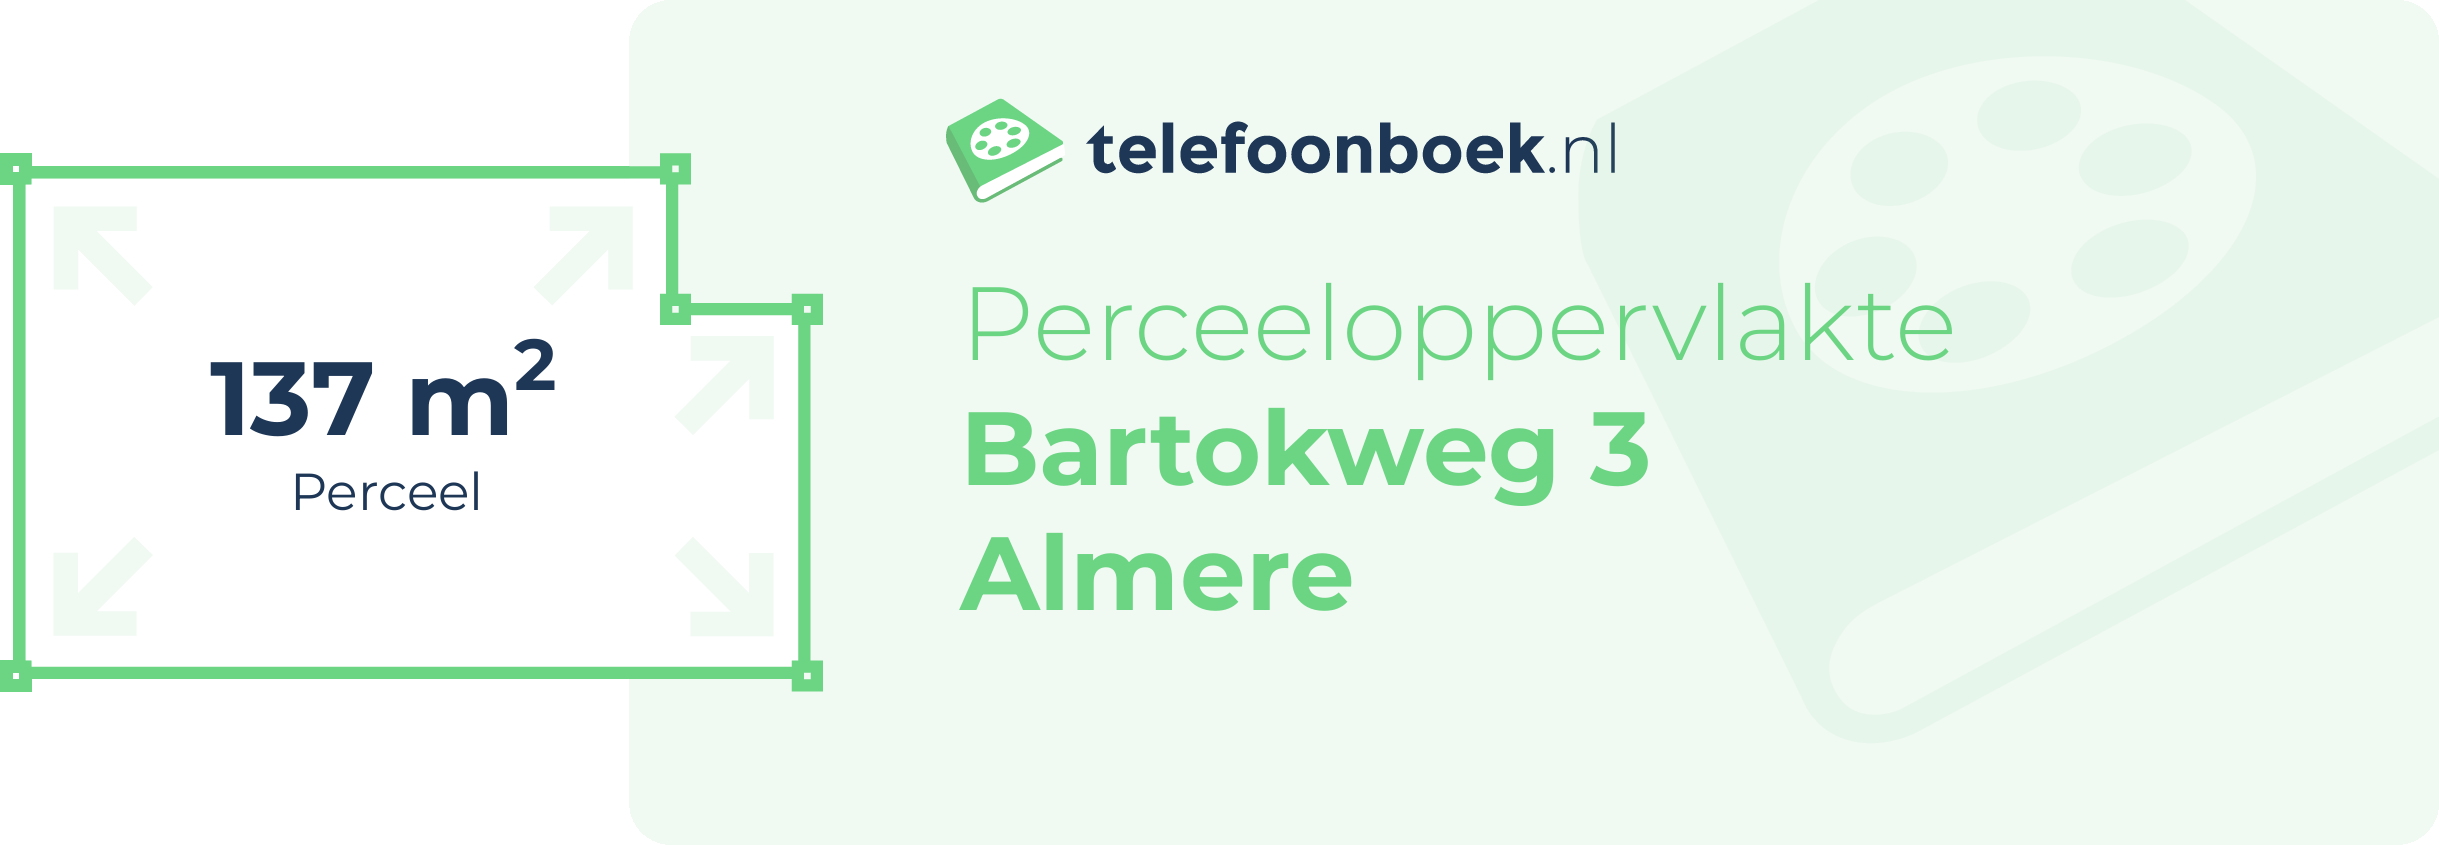 Perceeloppervlakte Bartokweg 3 Almere